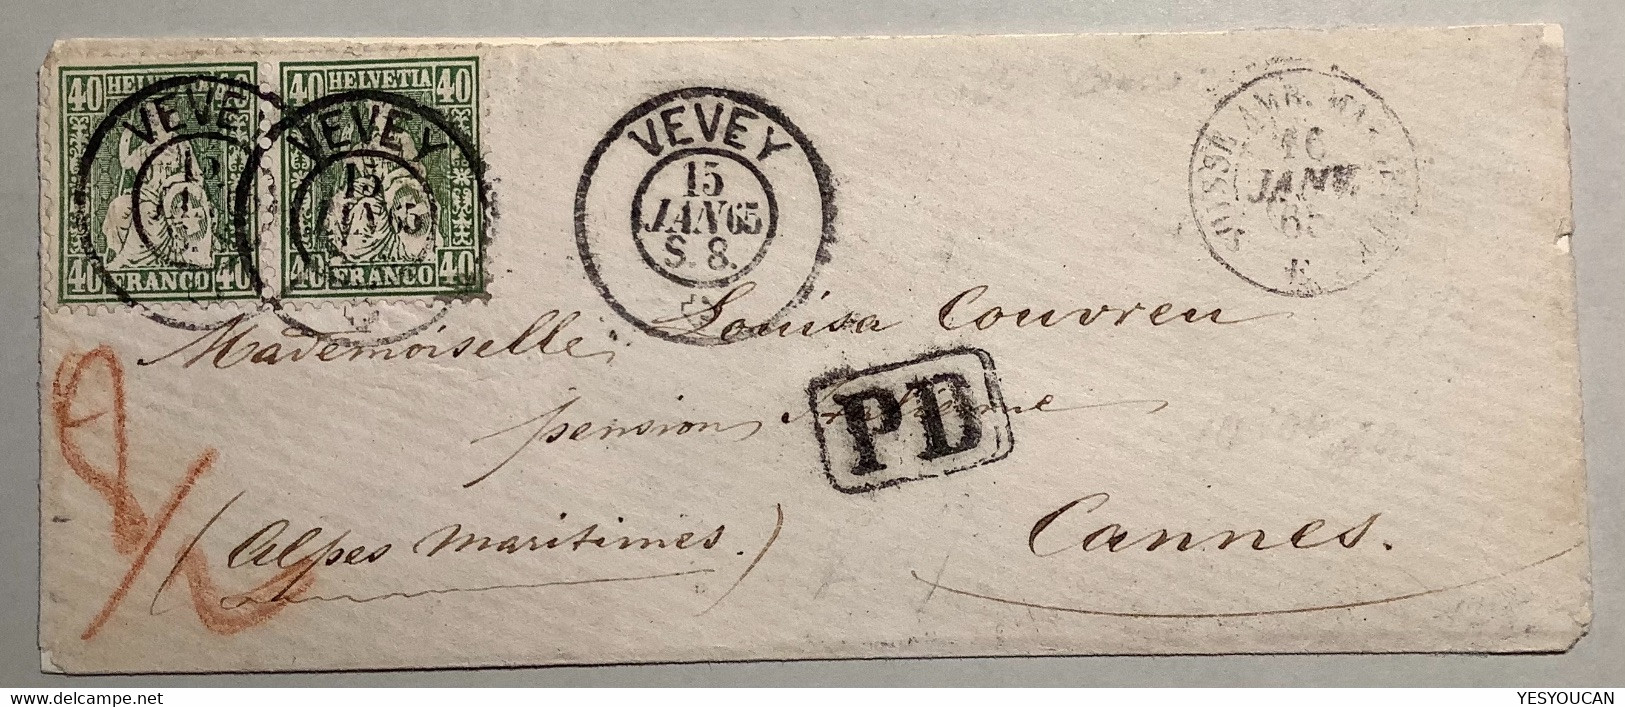 VEVEY 1865 (VD) Brief>Cannes Alpes Maritimes France, ZNr34 X2 1862 Sitzende Helvetia (Schweiz Suisse Lettre Cover - Lettres & Documents